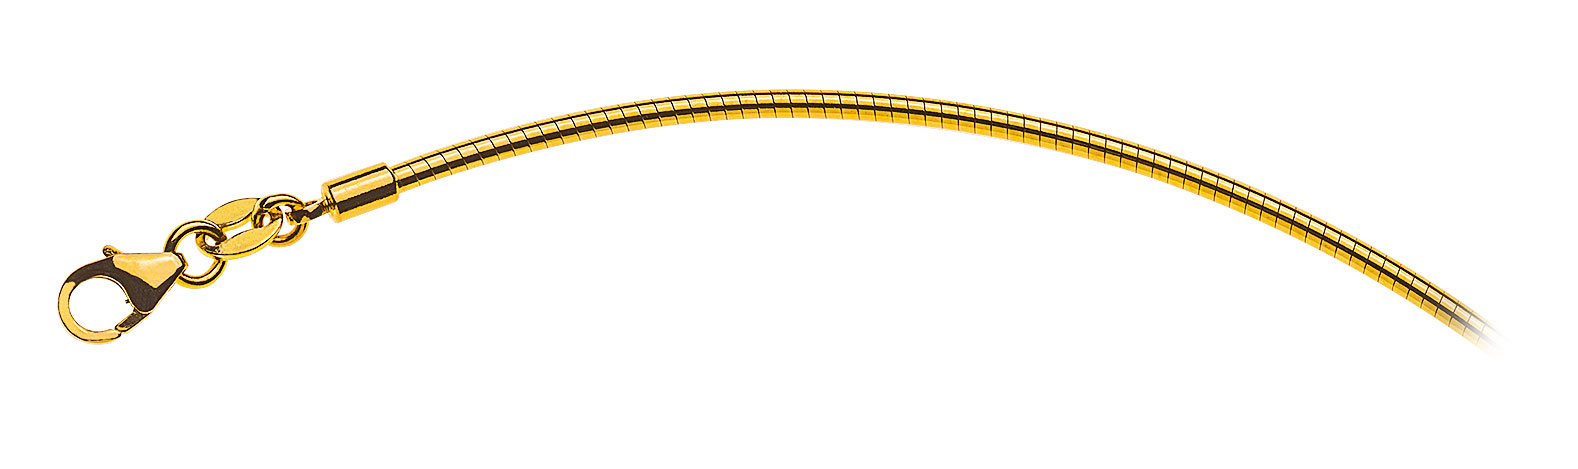 AURONOS Prestige Necklace yellow gold 18K omega chain 45cm 1.8mm